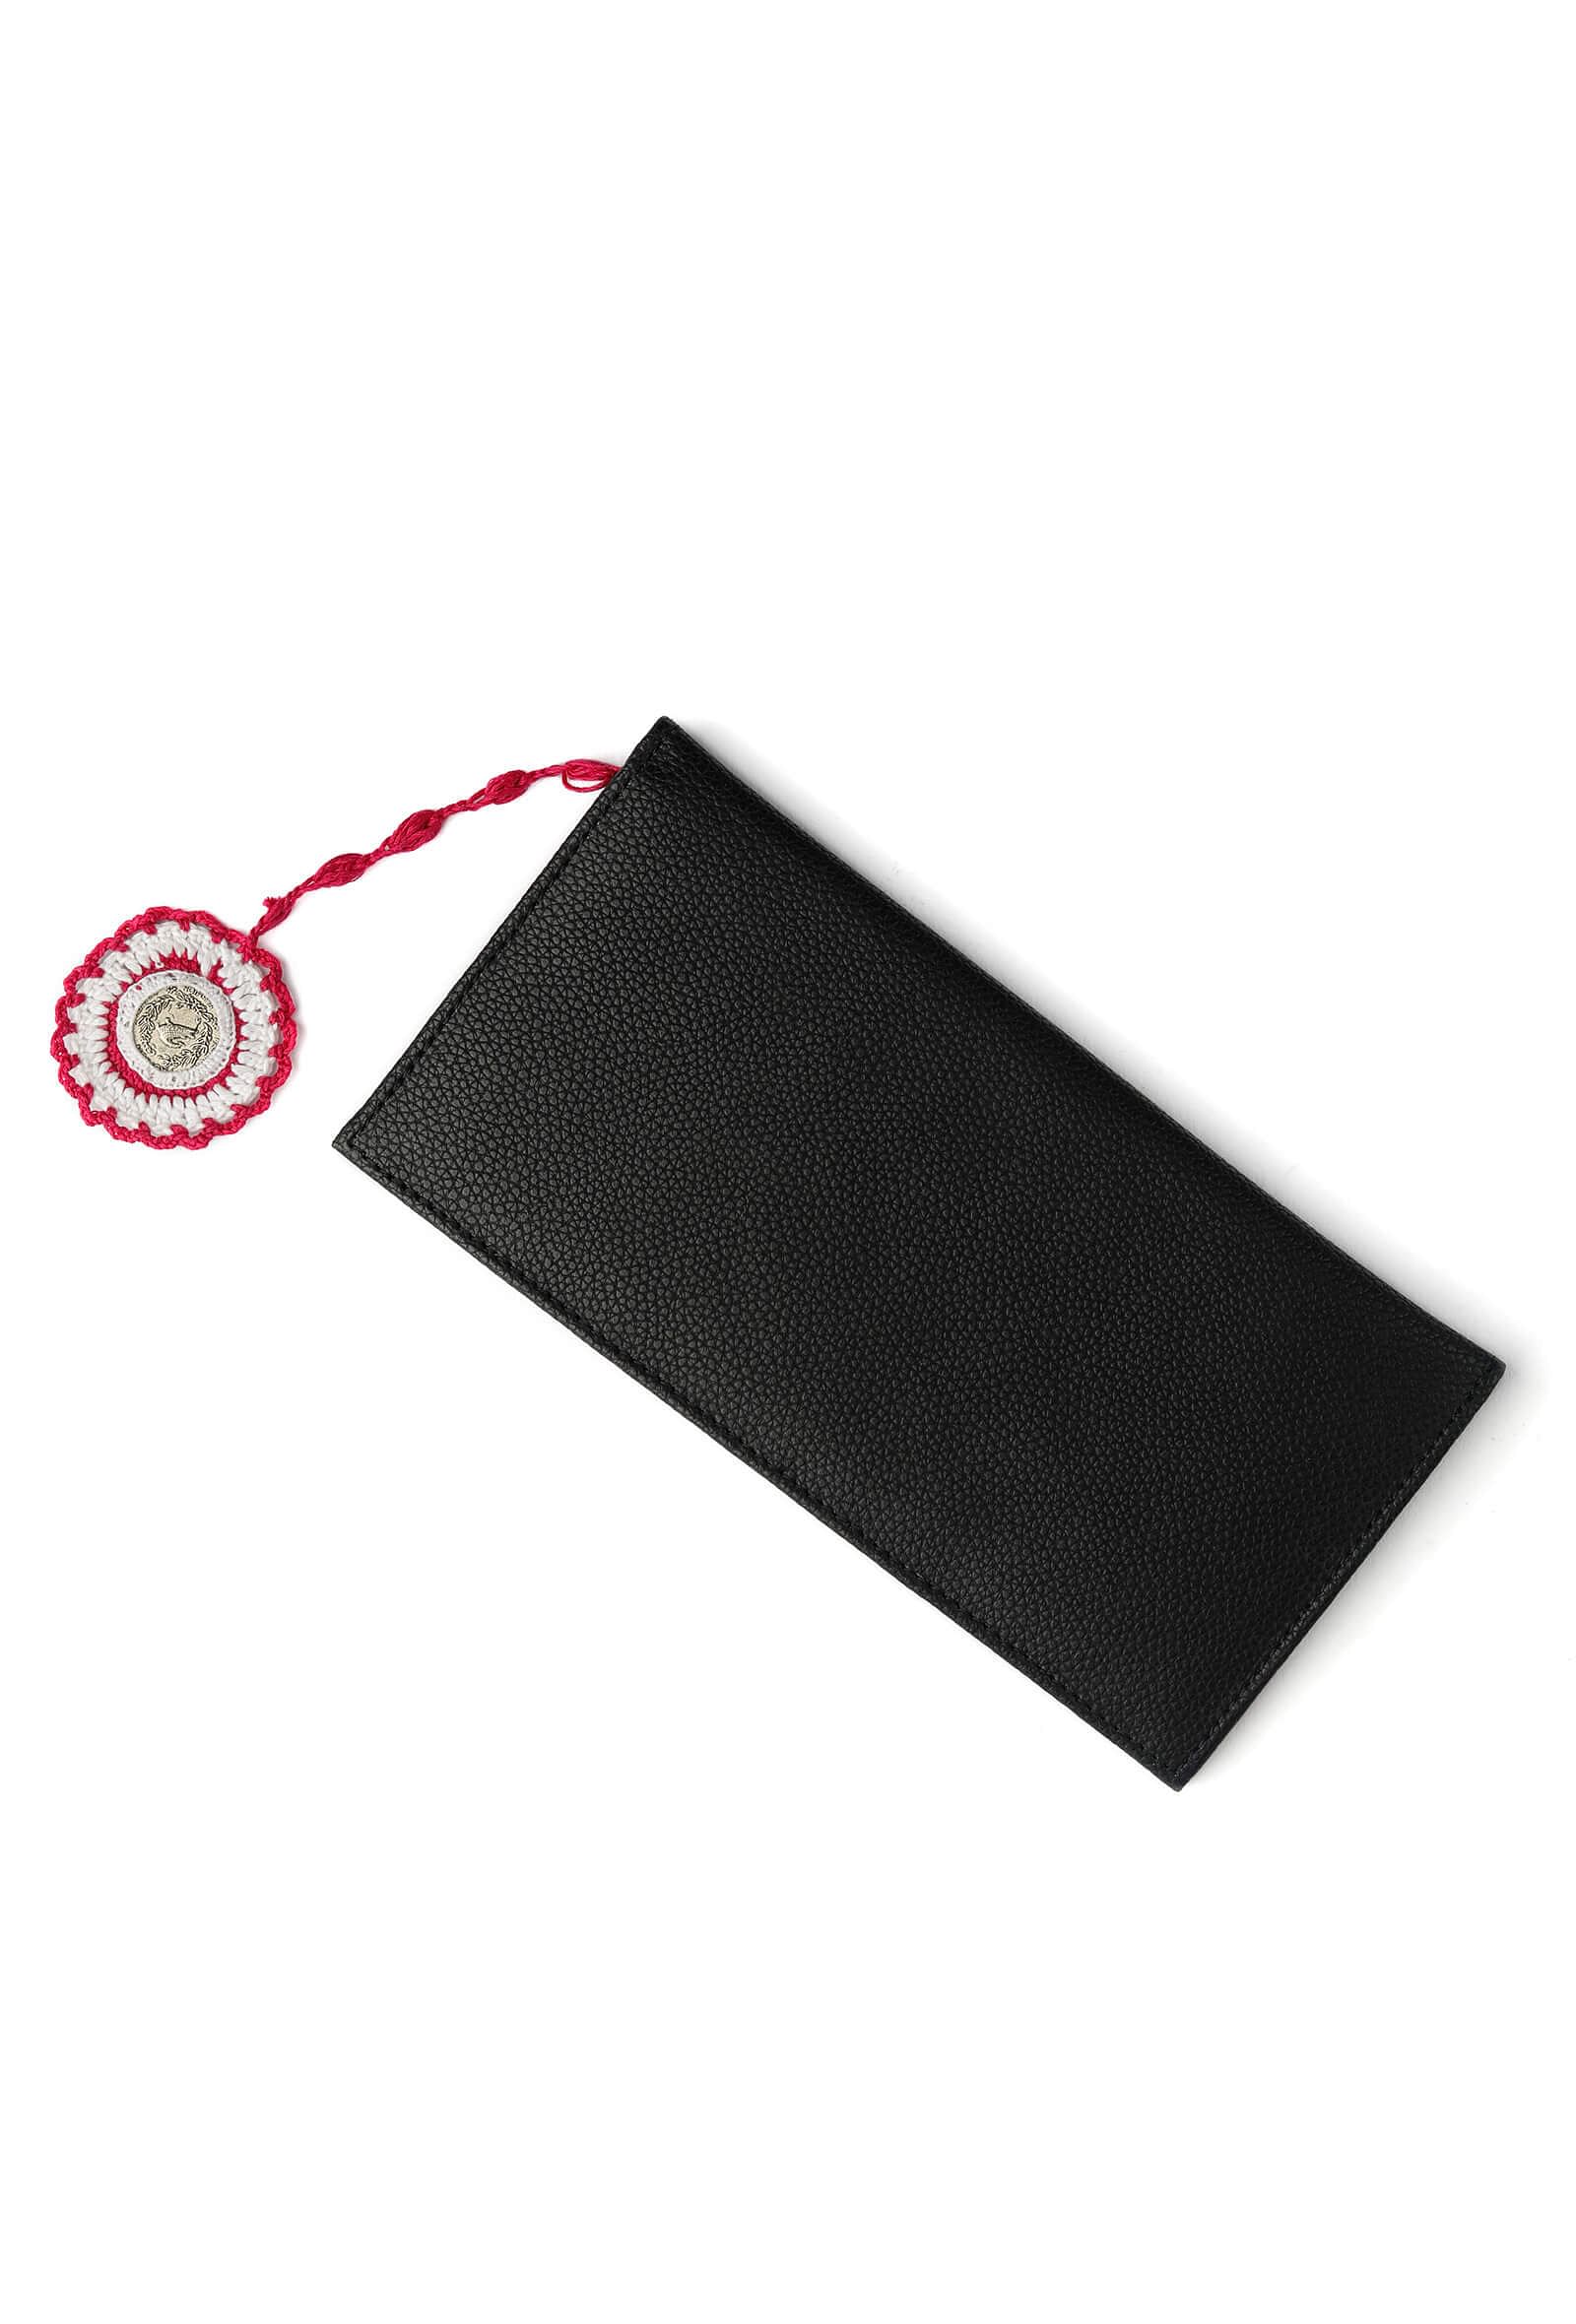 Black Solid Wallet with Tassel